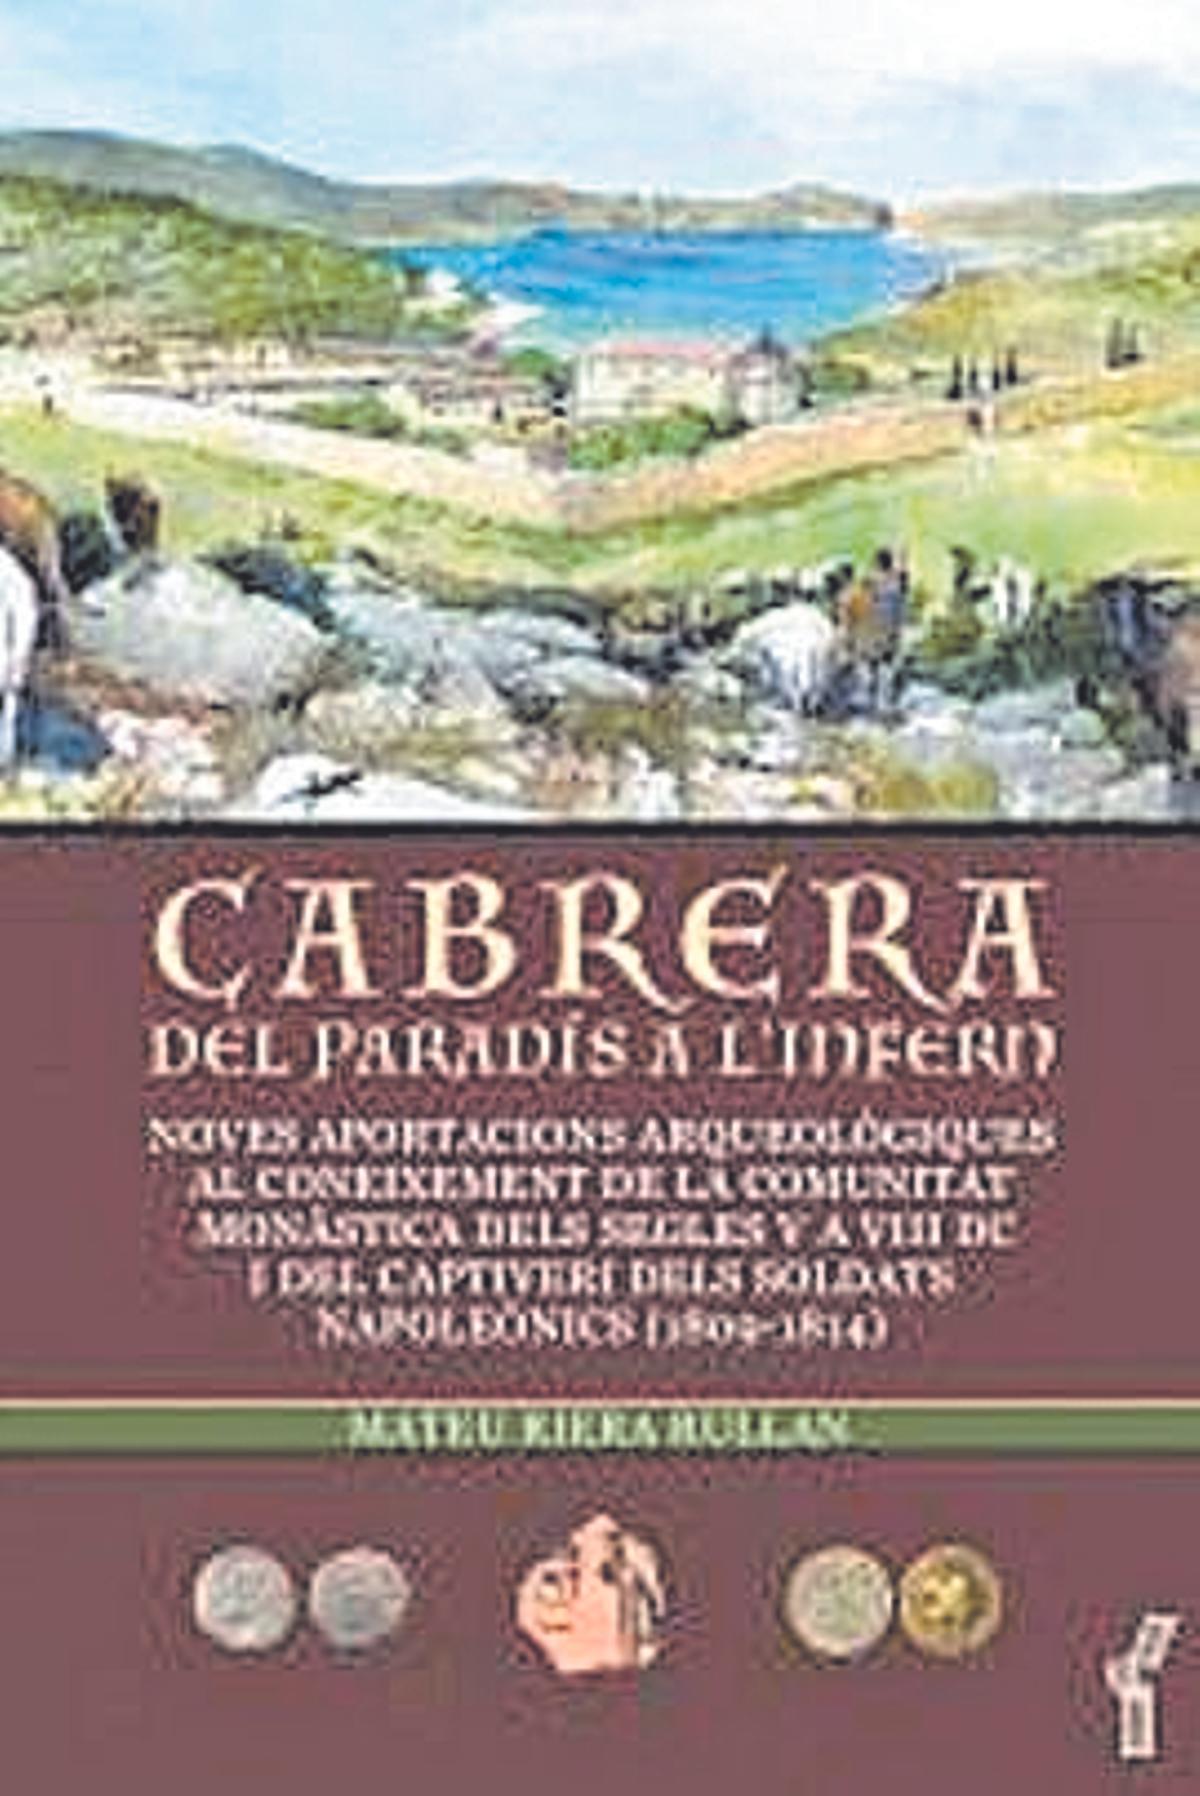 Cabrera | Mateu Riera. Documenta. 32 euros.